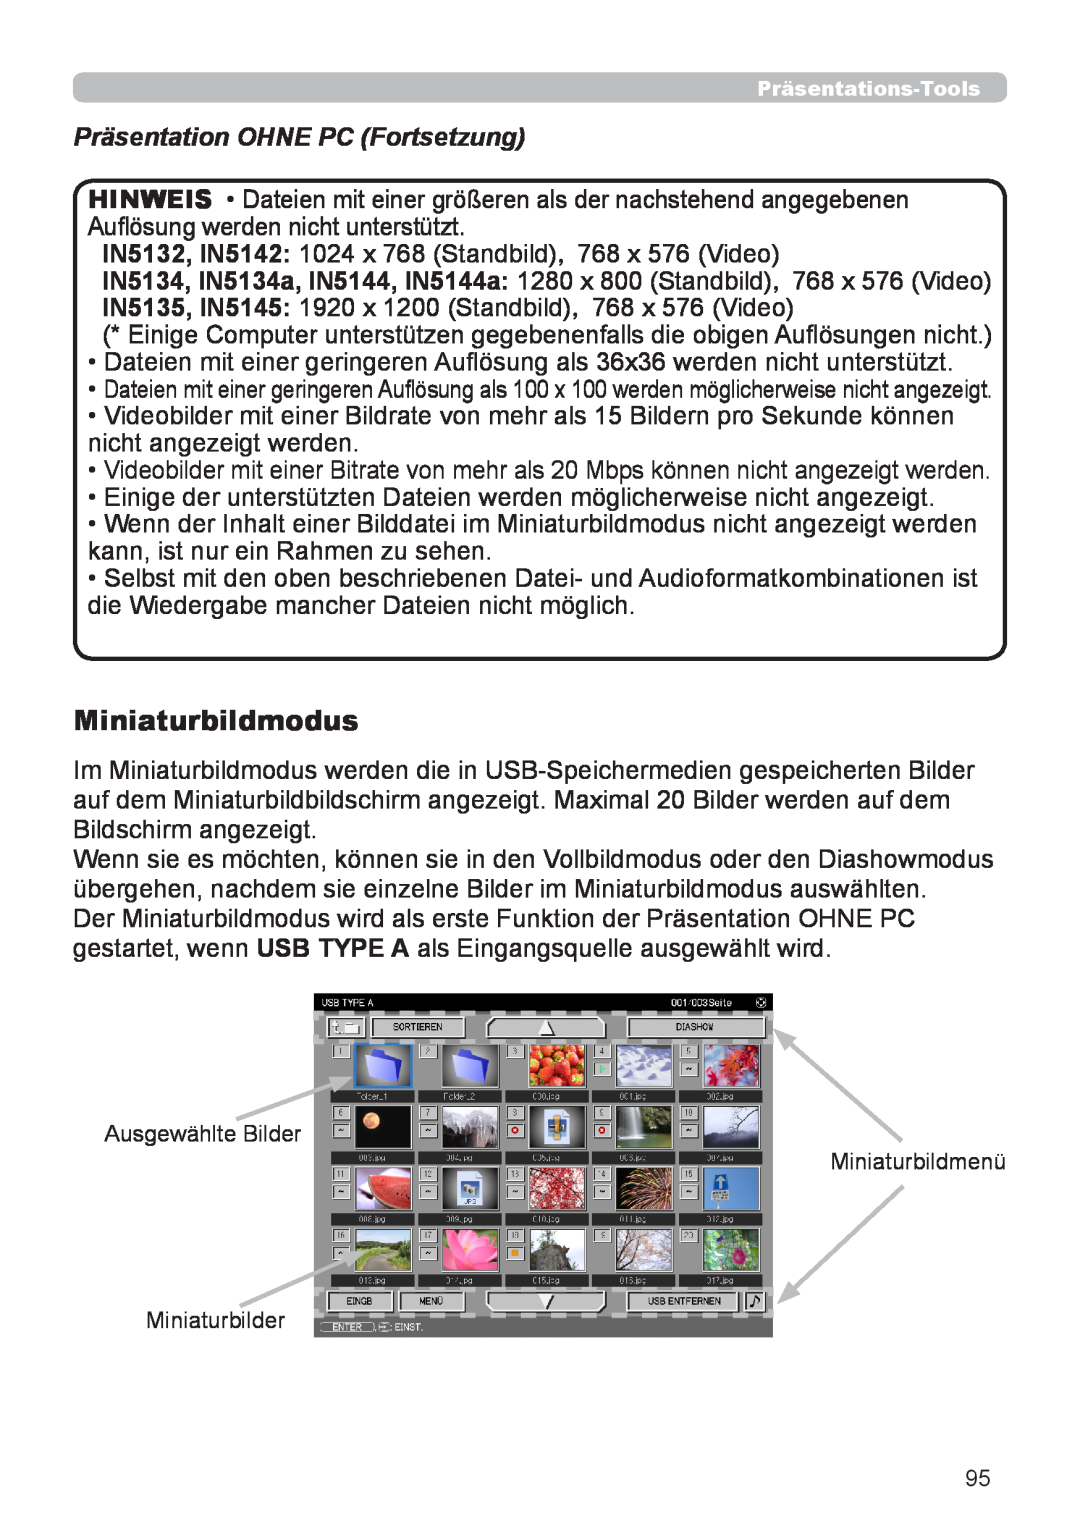 InFocus IN5132 user manual Miniaturbildmodus, Präsentation OHNE PC Fortsetzung 